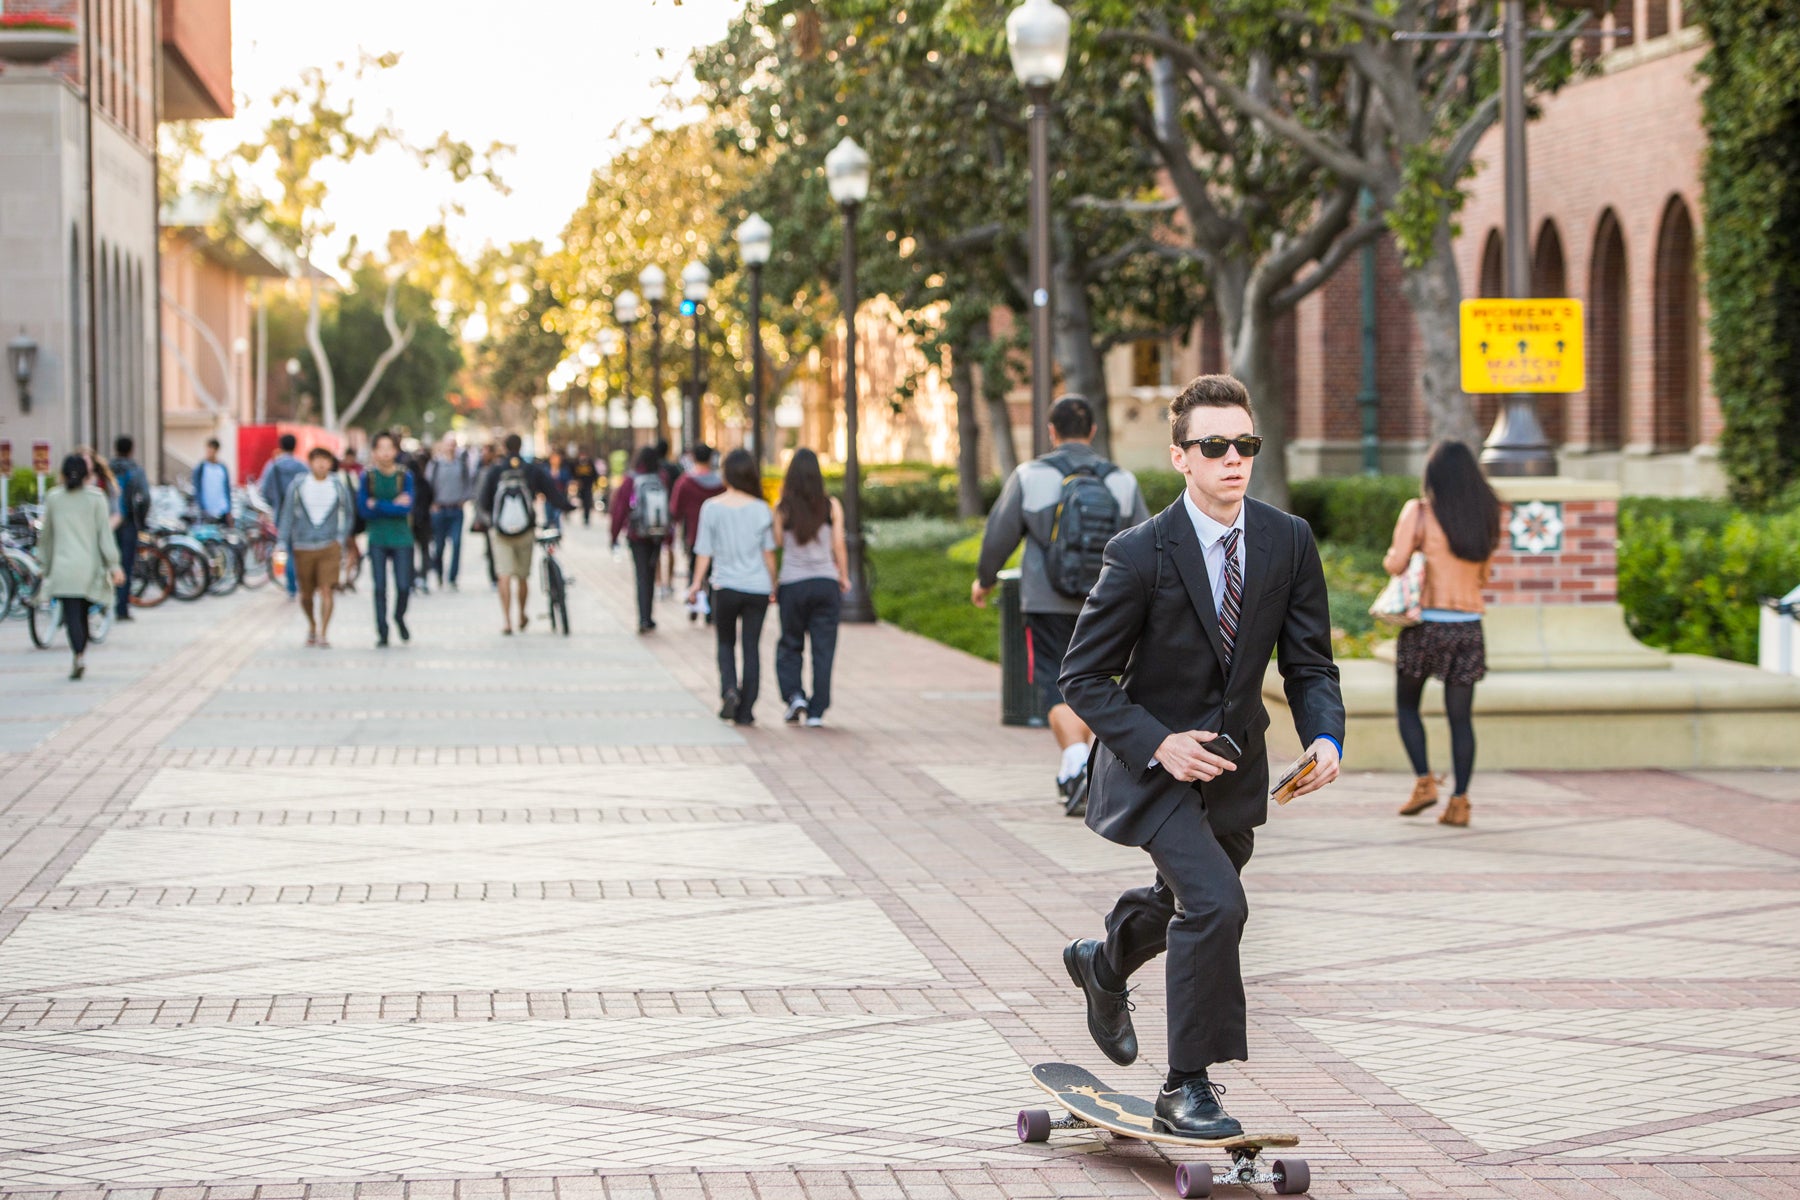 Trojan life: Skateboarding in suits